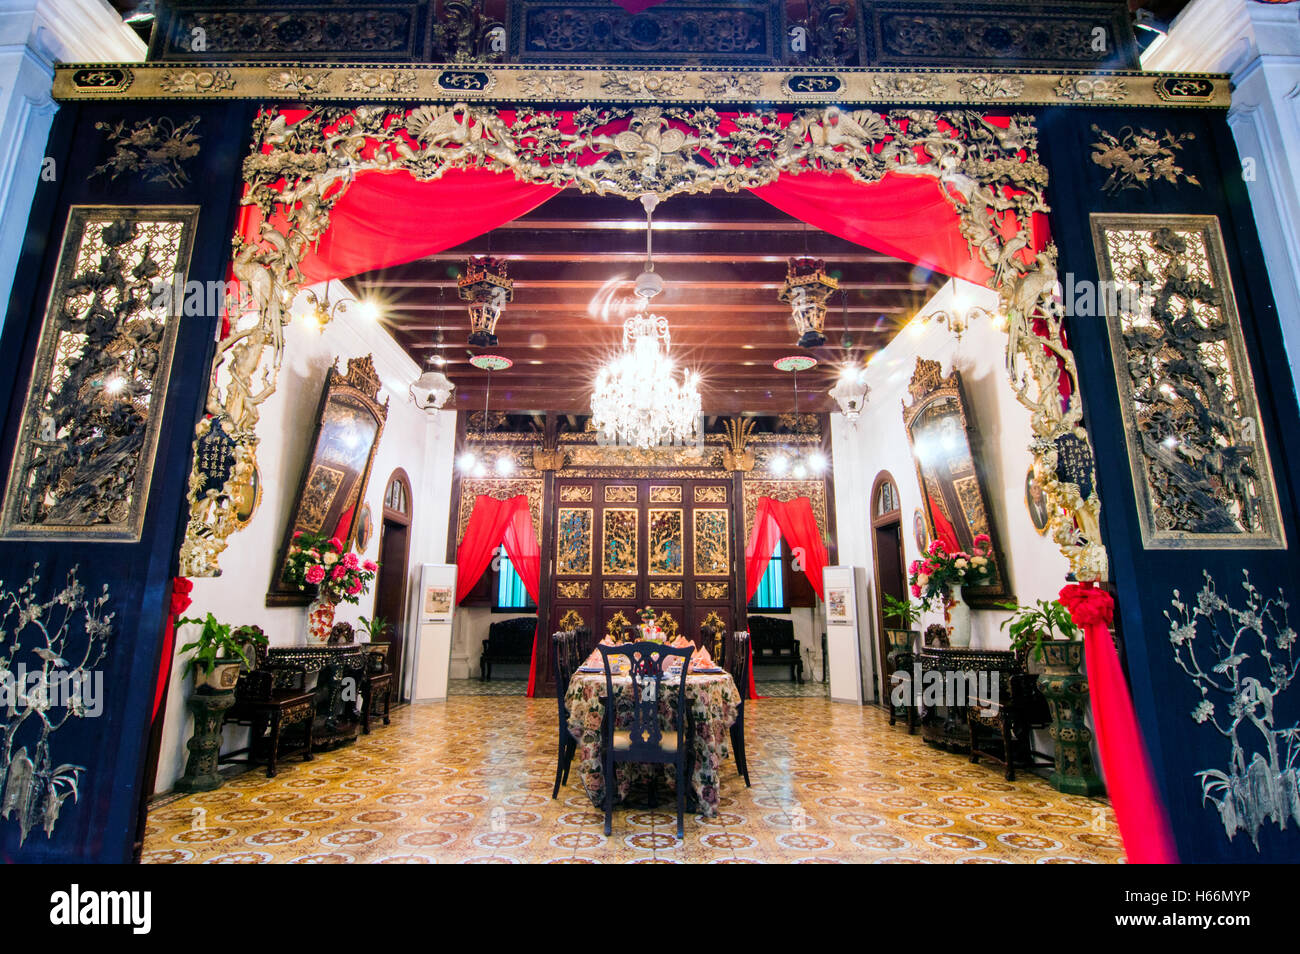 Dining room from lobby, Pinang Peranakan Museum, Lebuh Gereja, Georgetown, Penang, Malaysia Stock Photo